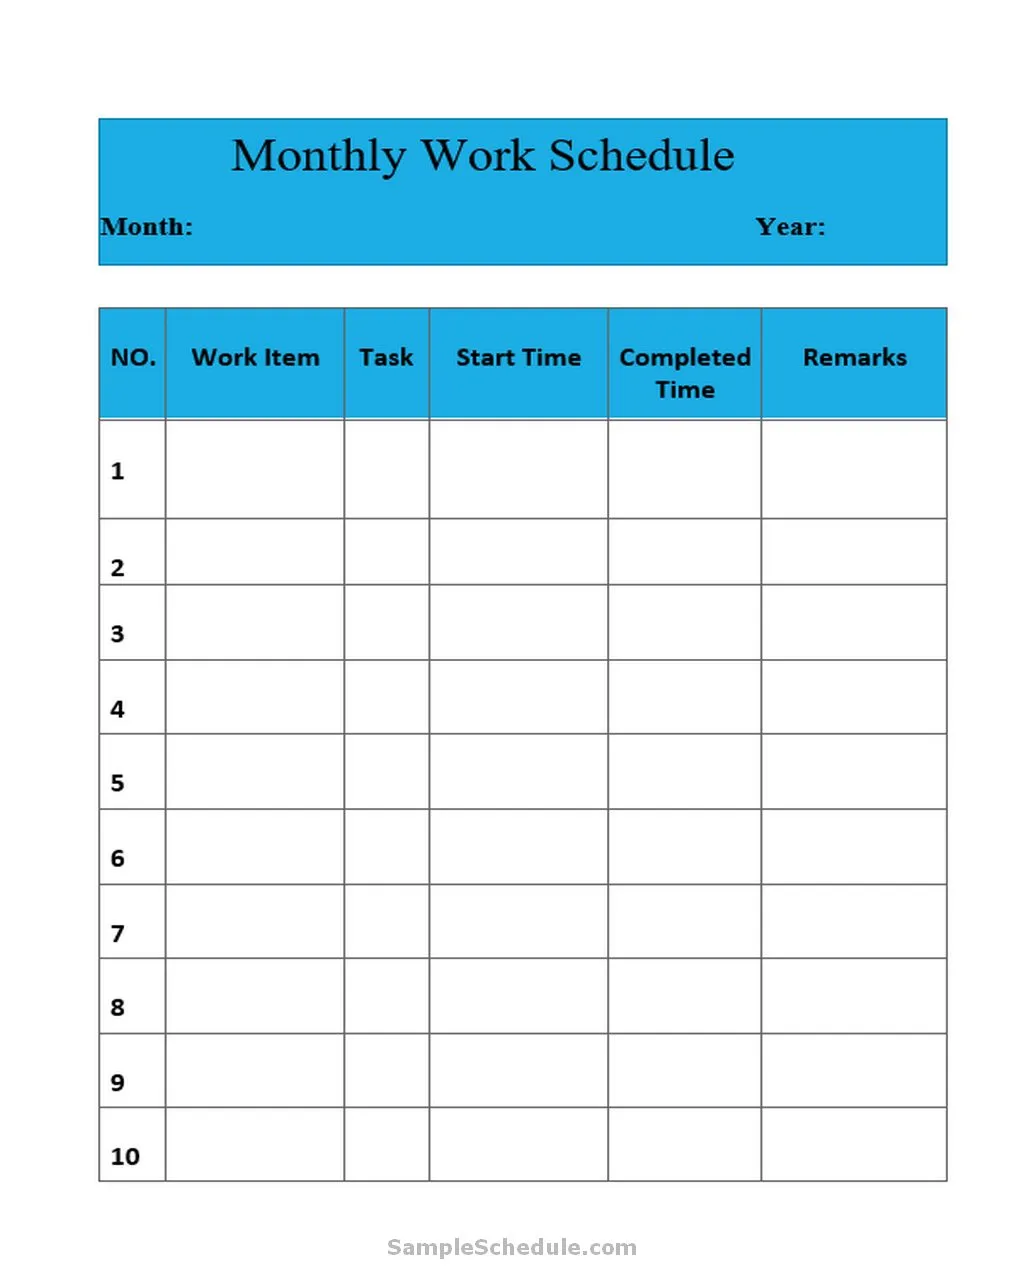 Monthly Work Schedule Template 04